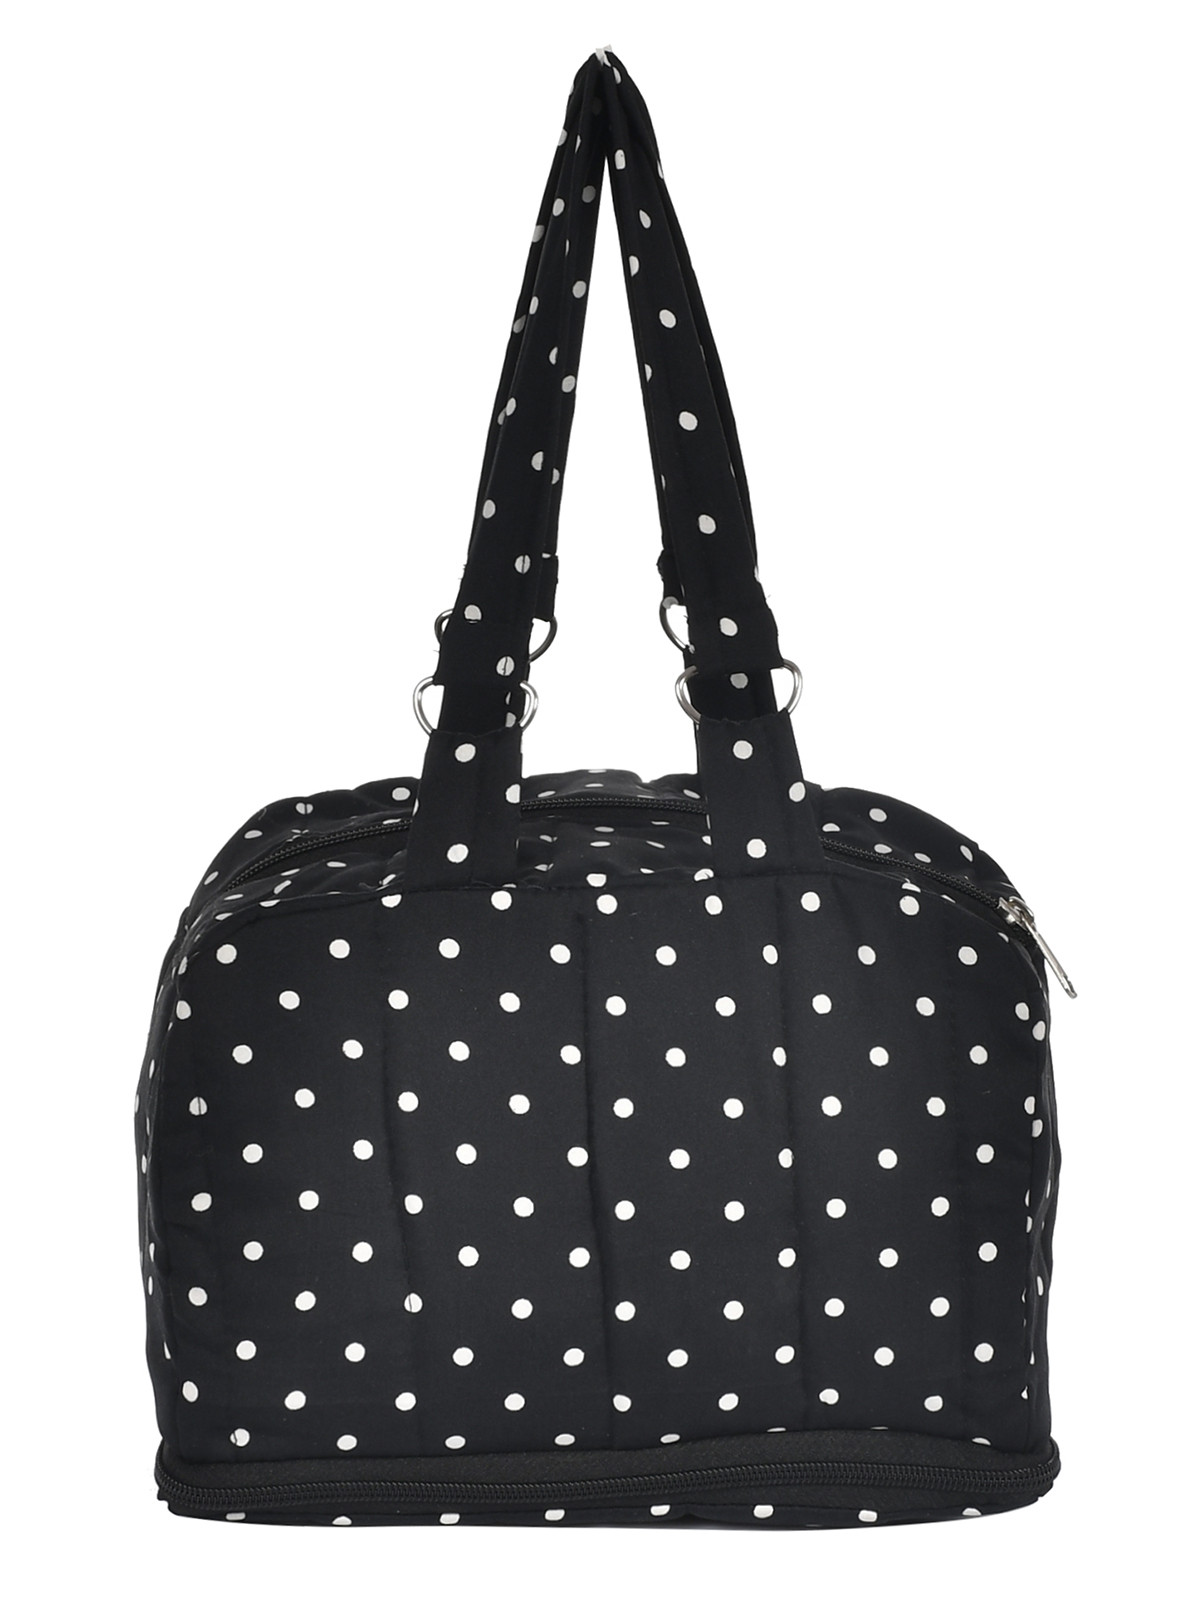 Kuber Industries Dot Printed Multiuses Hand Bag: Tote Bag: Travel Toiletry Bag For Women/Girls (Black)-45KM017